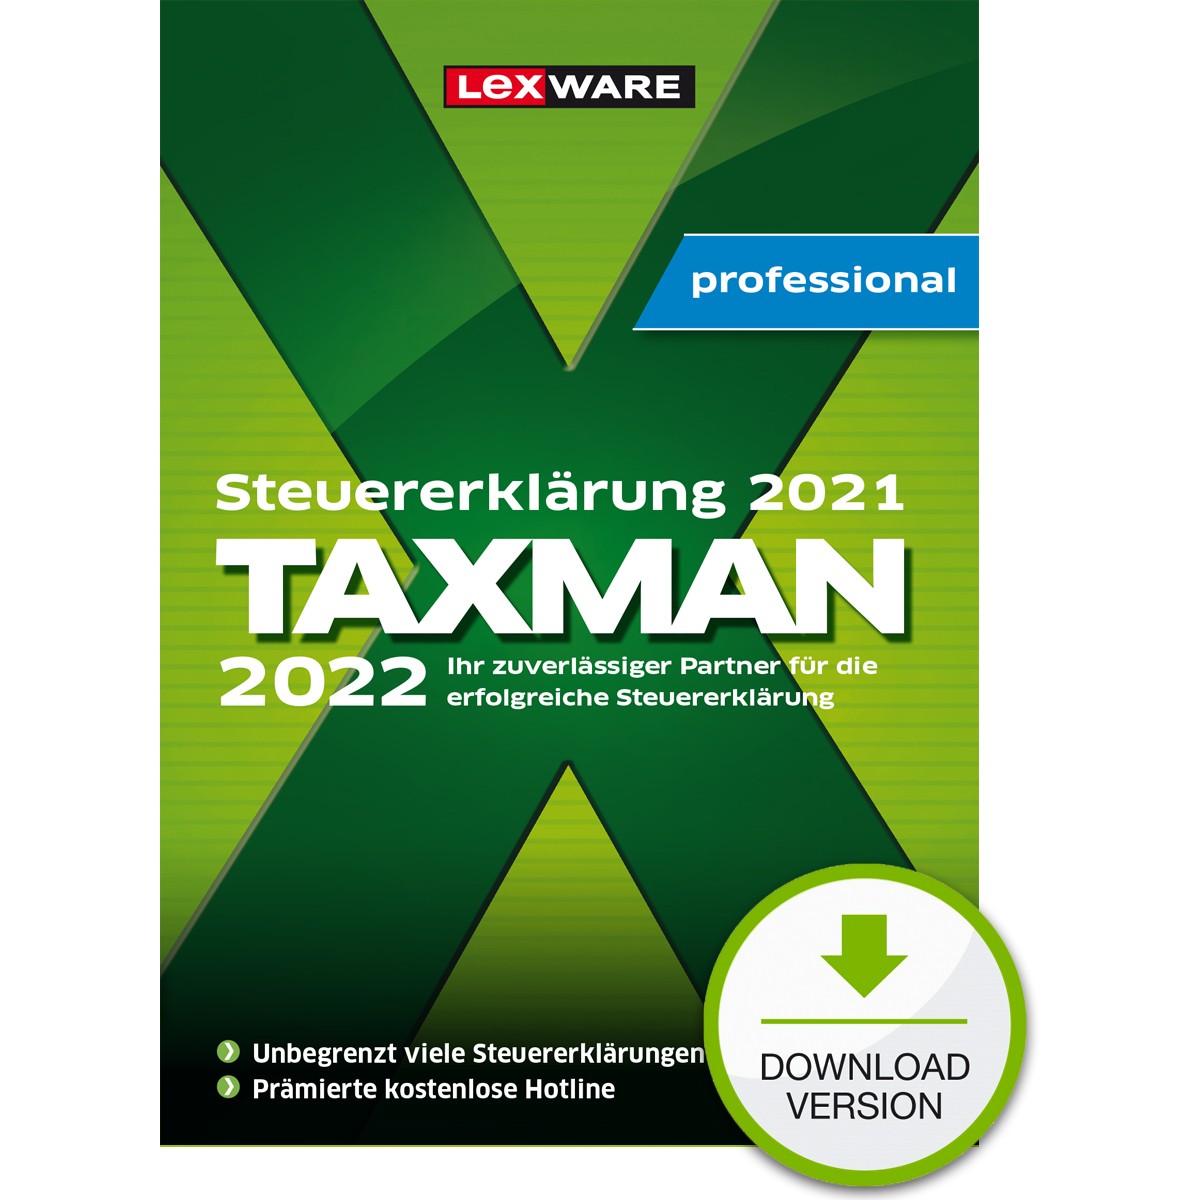 Lexware Taxman professional 2022 - 1 Device. ESD-DownloadESD